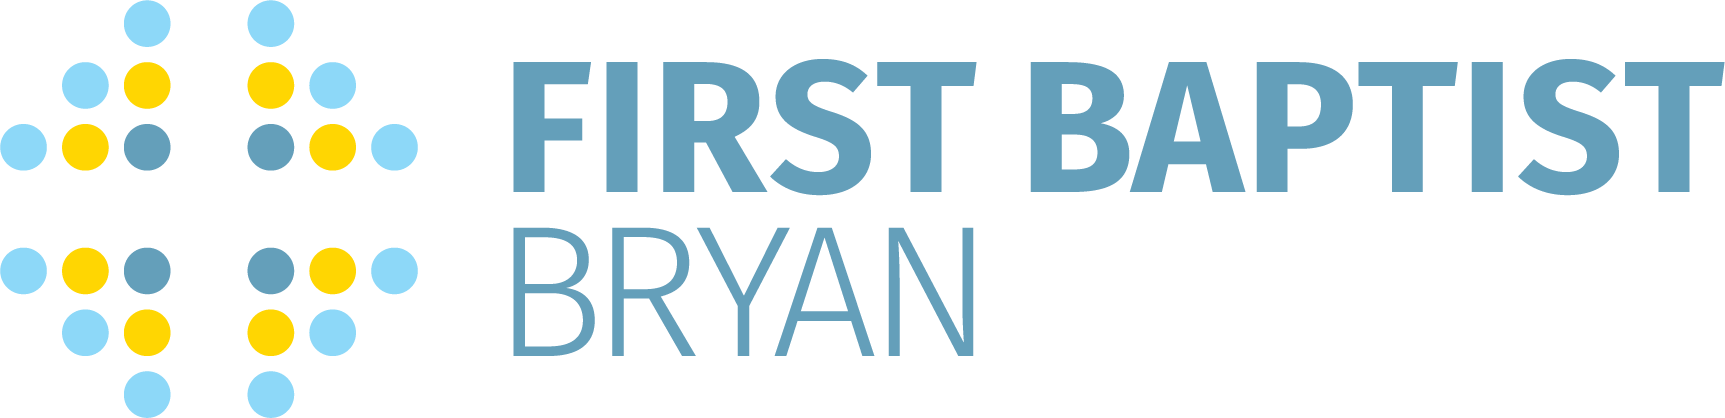 First Baptist Bryan logo